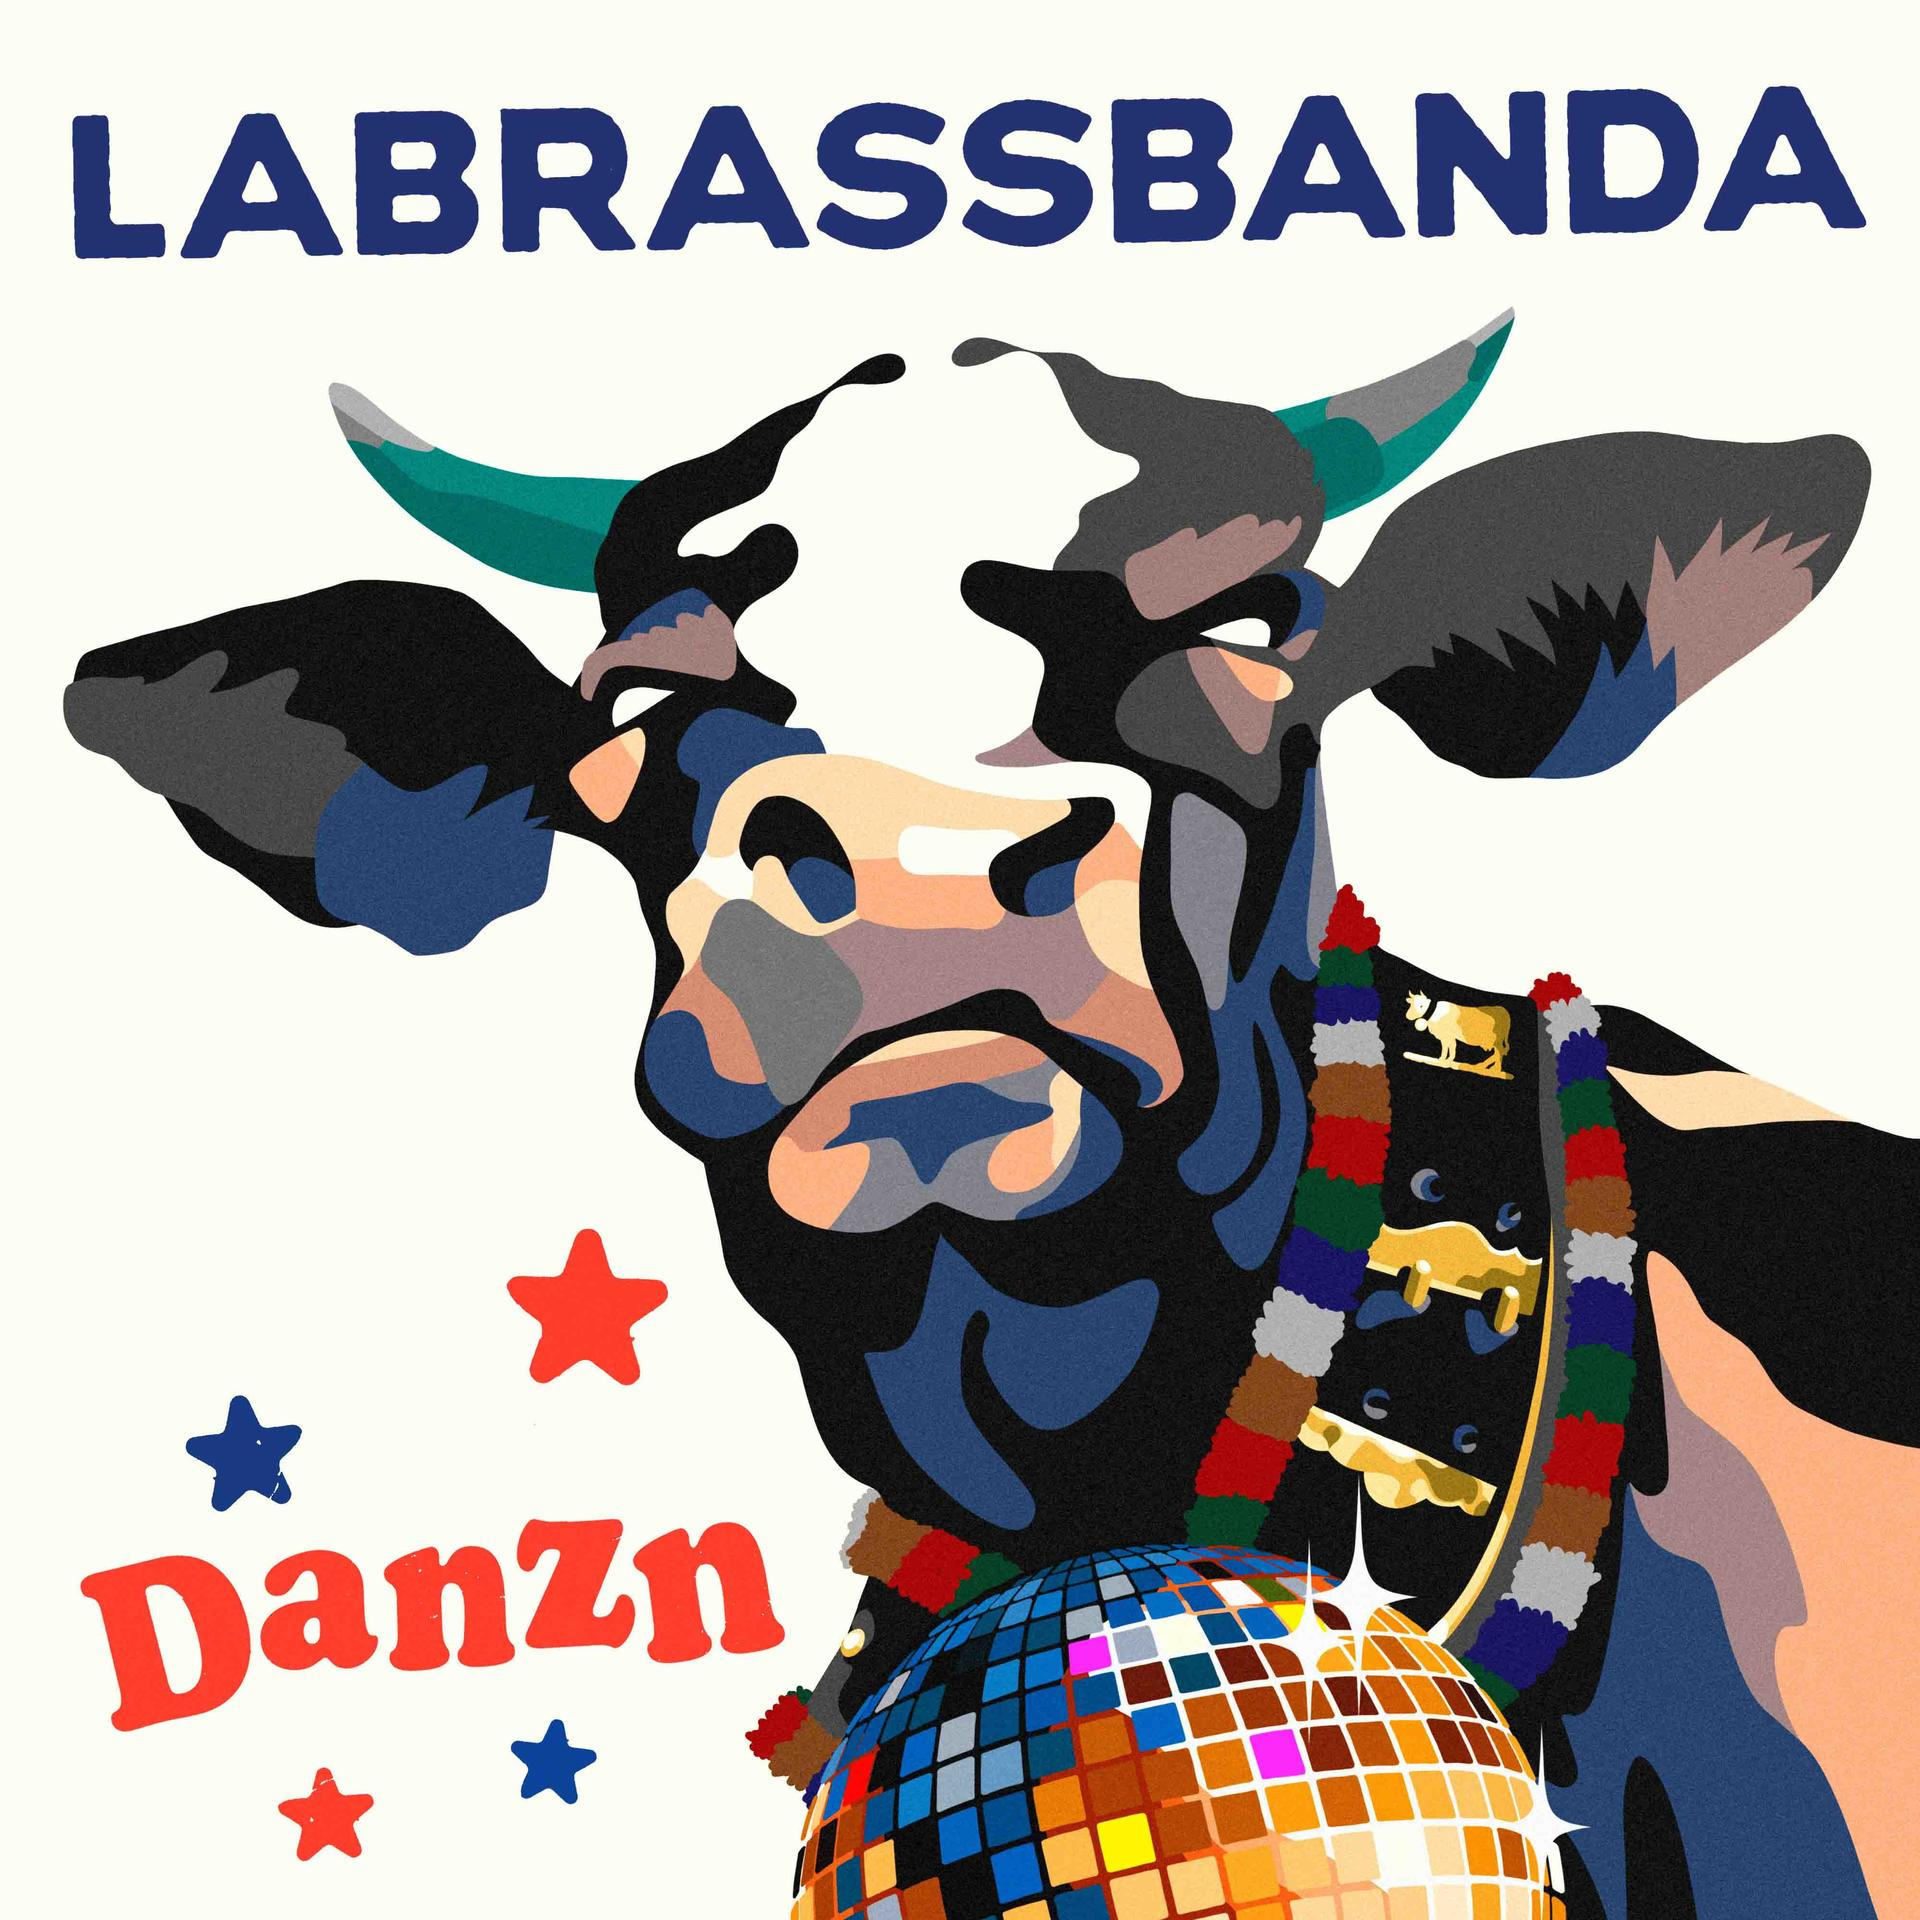 Album) Danzn (CD) - - (CD LaBrassBanda